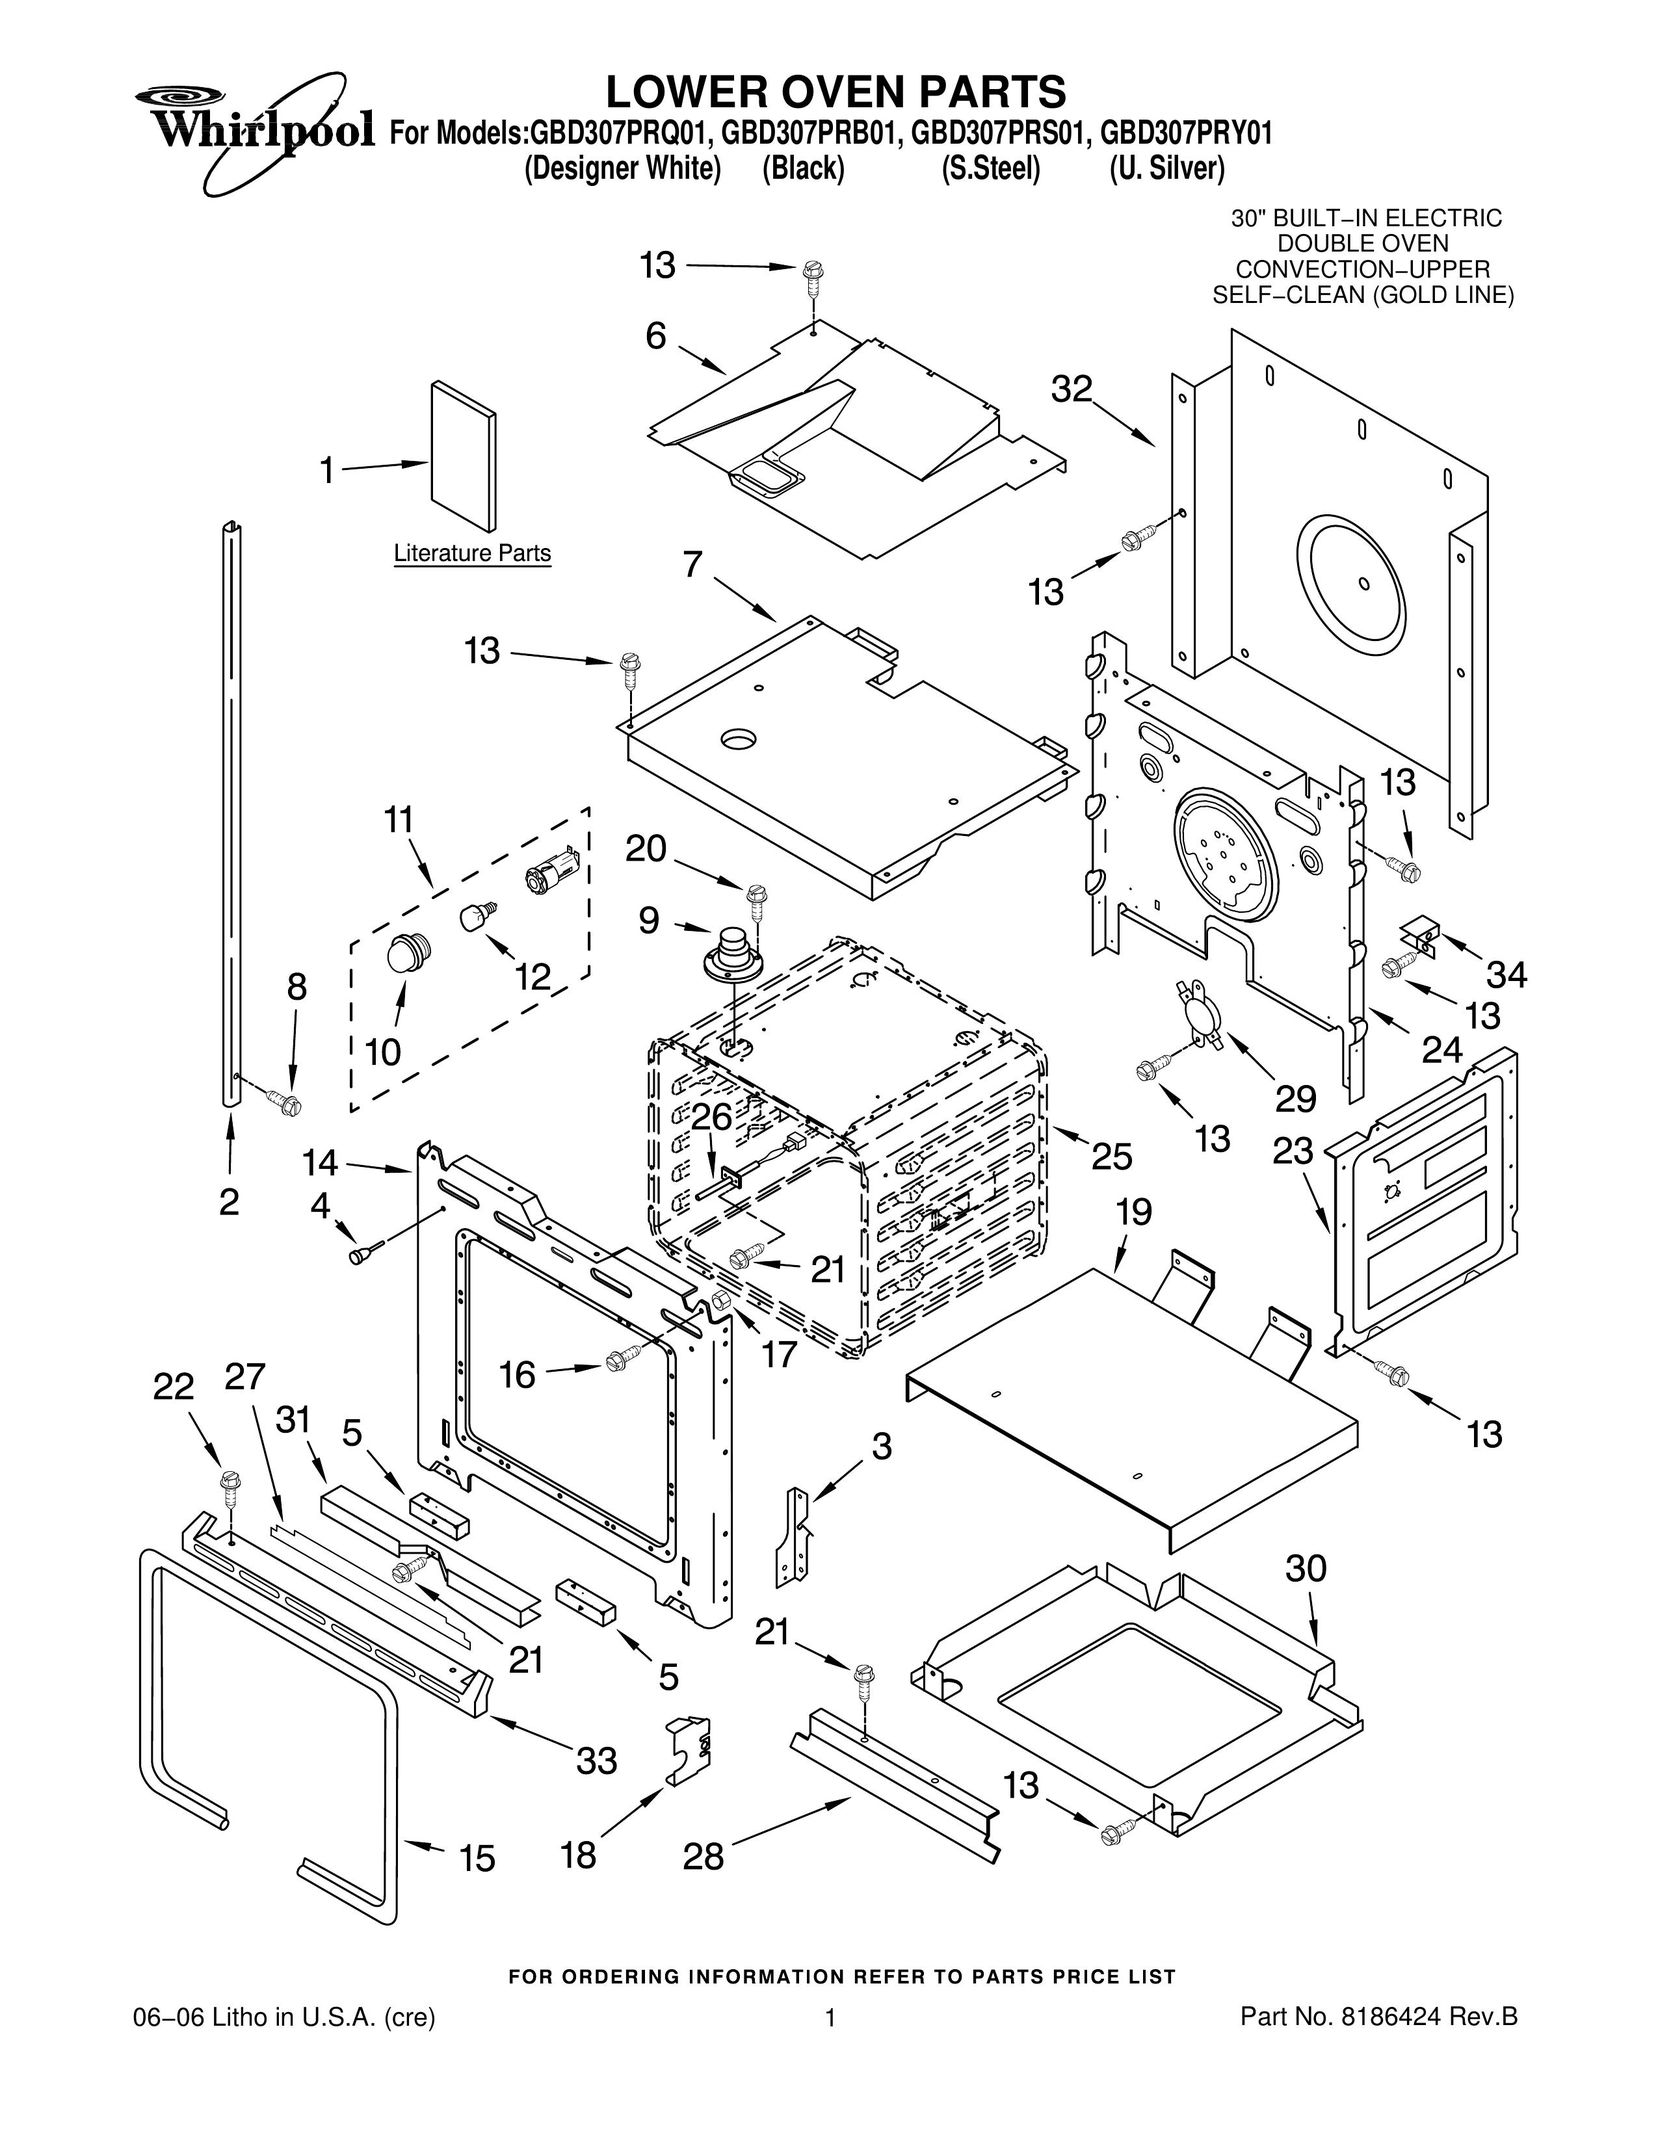 Whirlpool GBD307PRB01 Oven User Manual